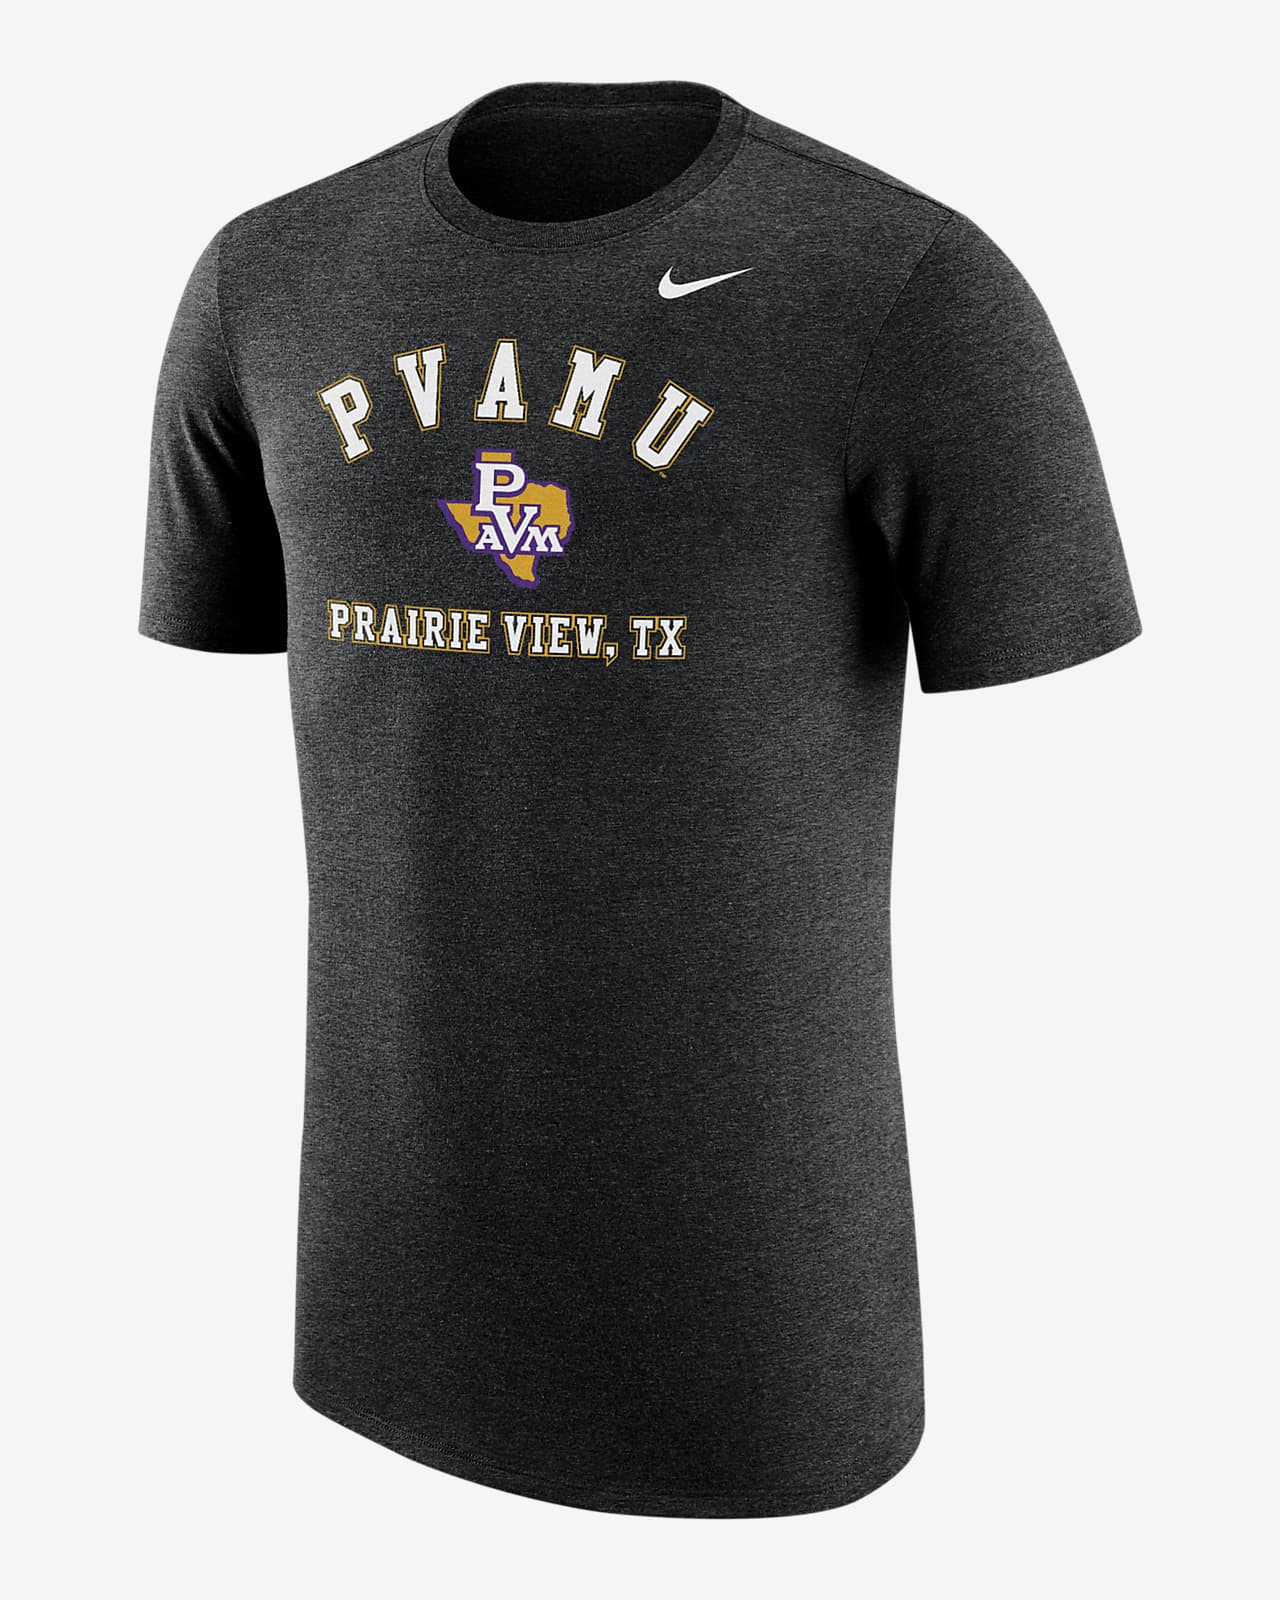 Playera universitaria Nike para hombre Prairie View A&M